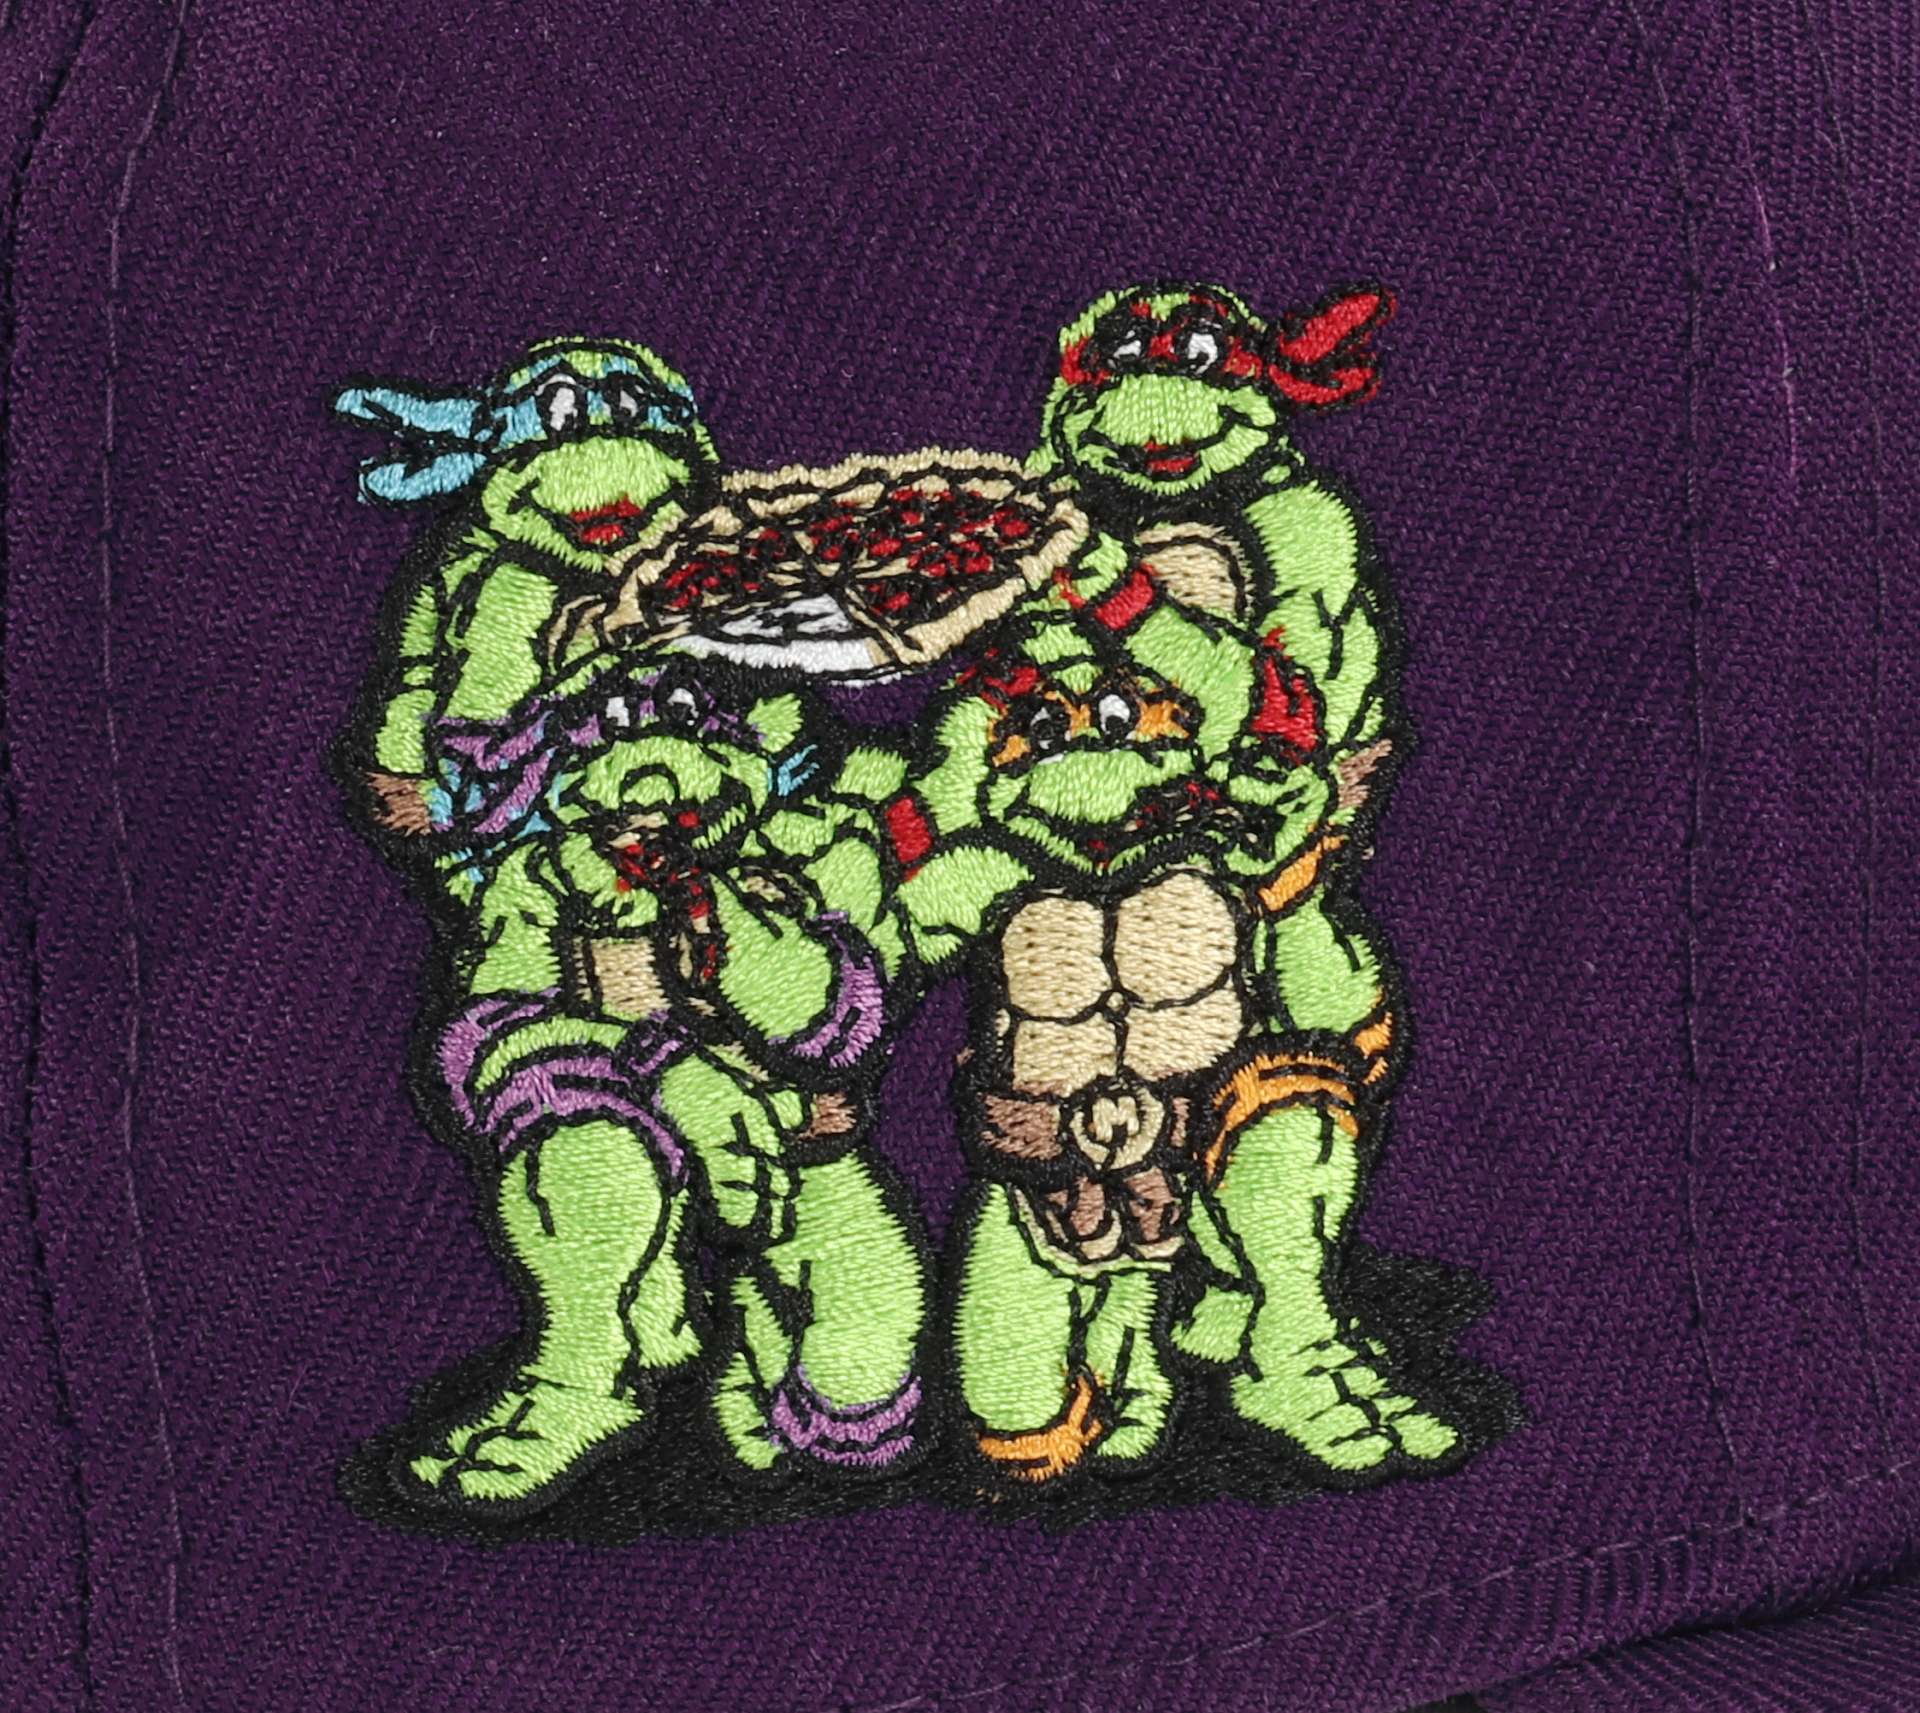 Cowabunga Pizza Ninja Turtles Purple TMNT Edition 59Fifty Cap New Era